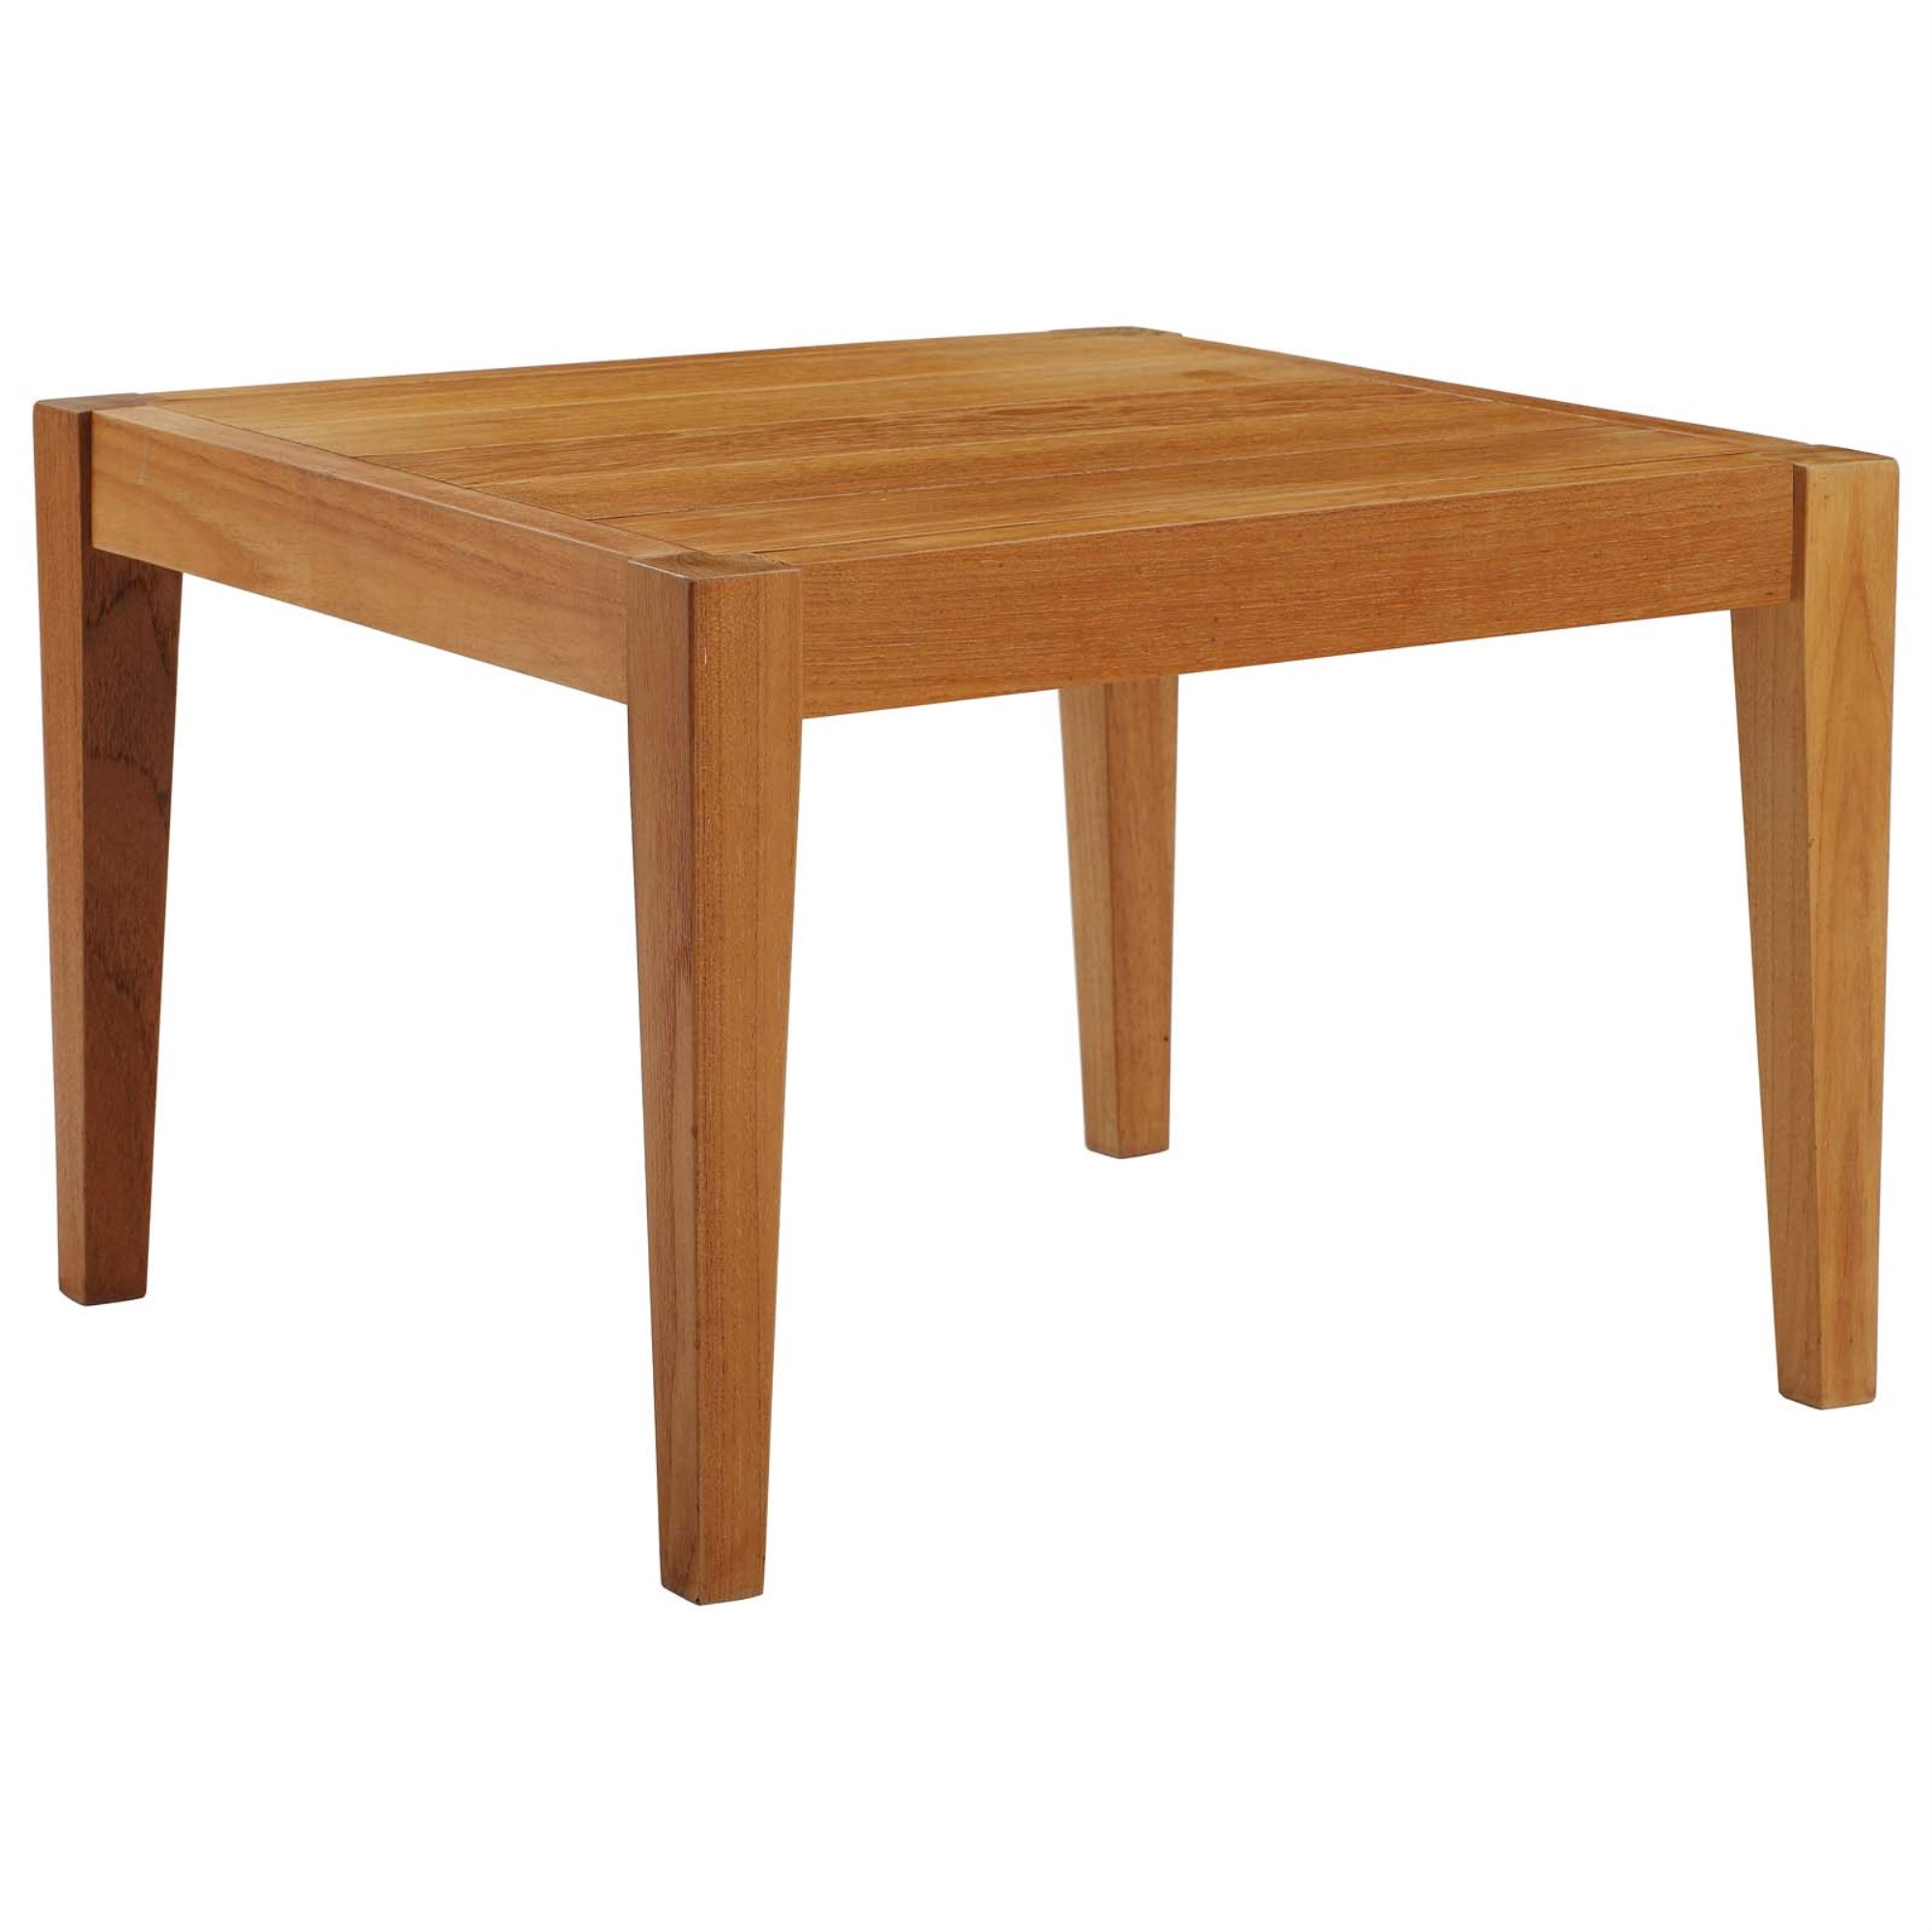 Ergode Northlake Outdoor Patio Premium Grade A Teak Wood Side Table - Natural